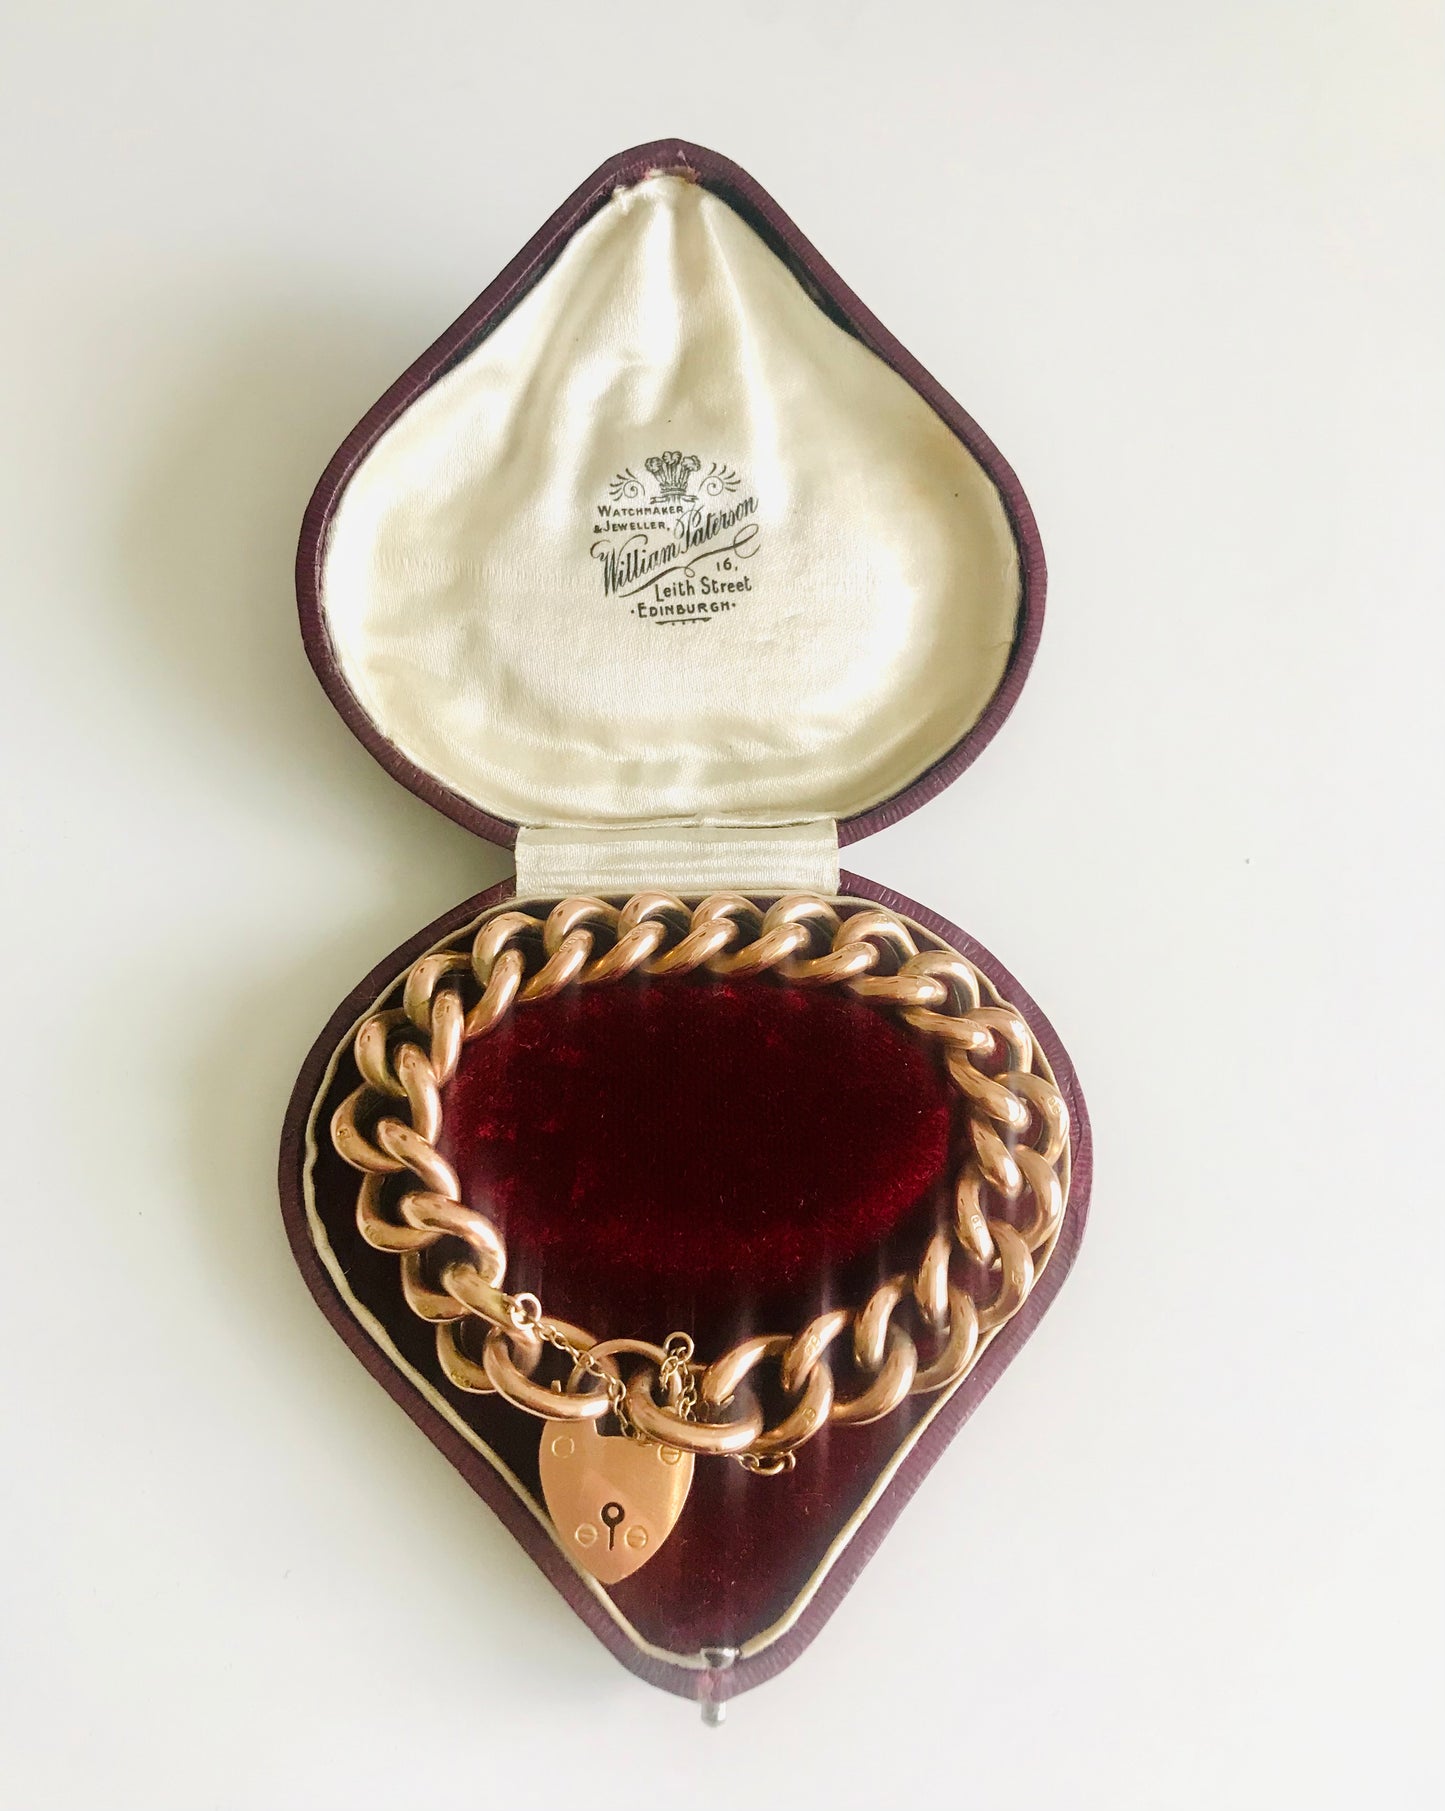 Chunky 9ct Gold Charm Bracelet in original red heart presentation box